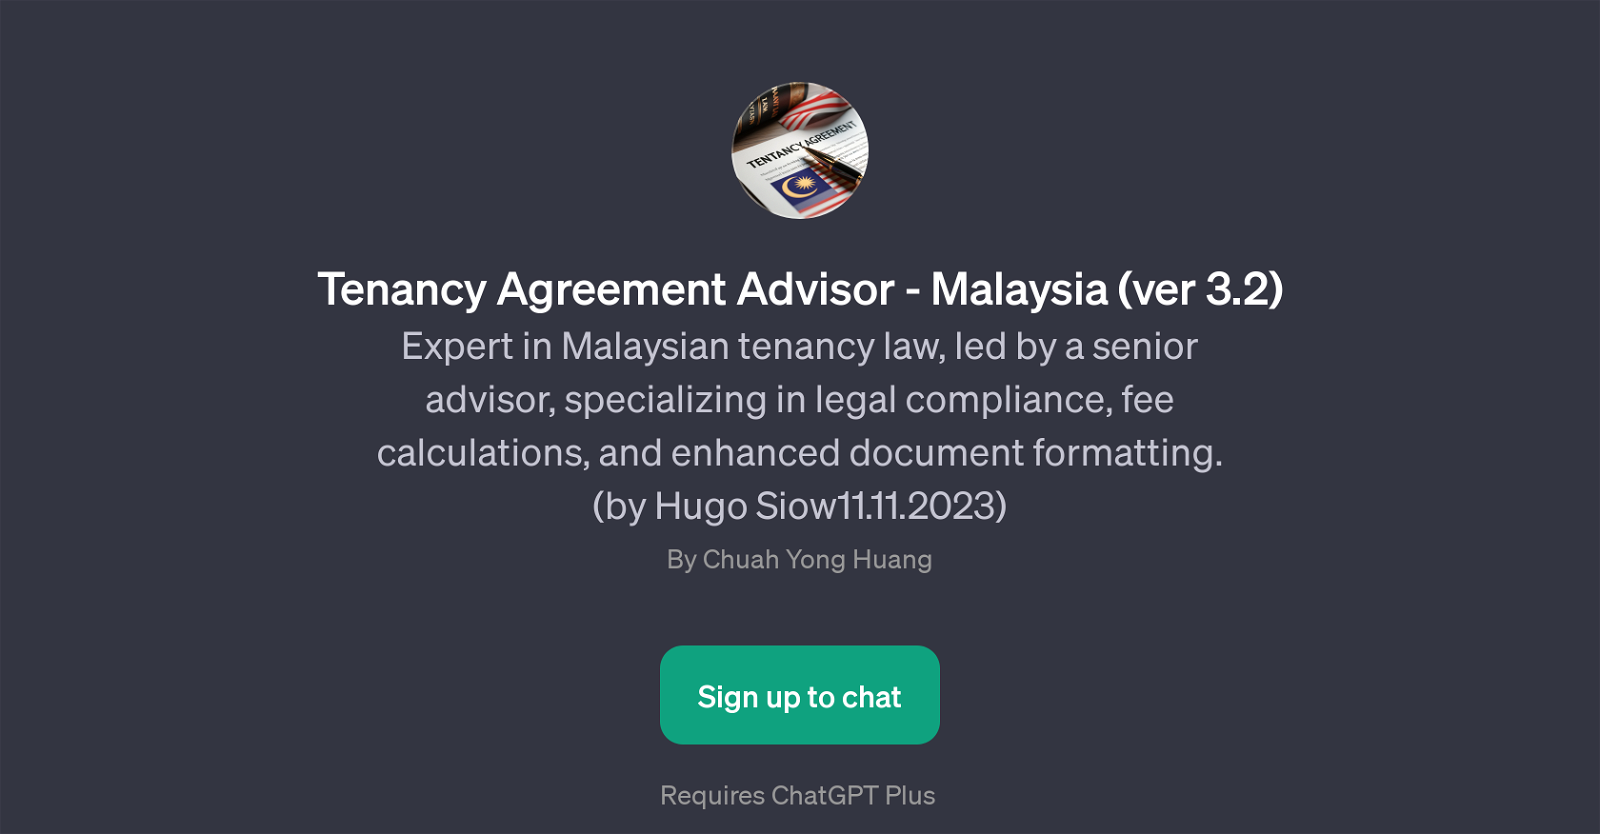 Tenancy Agreement Advisor - Malaysia (ver 3.2) website